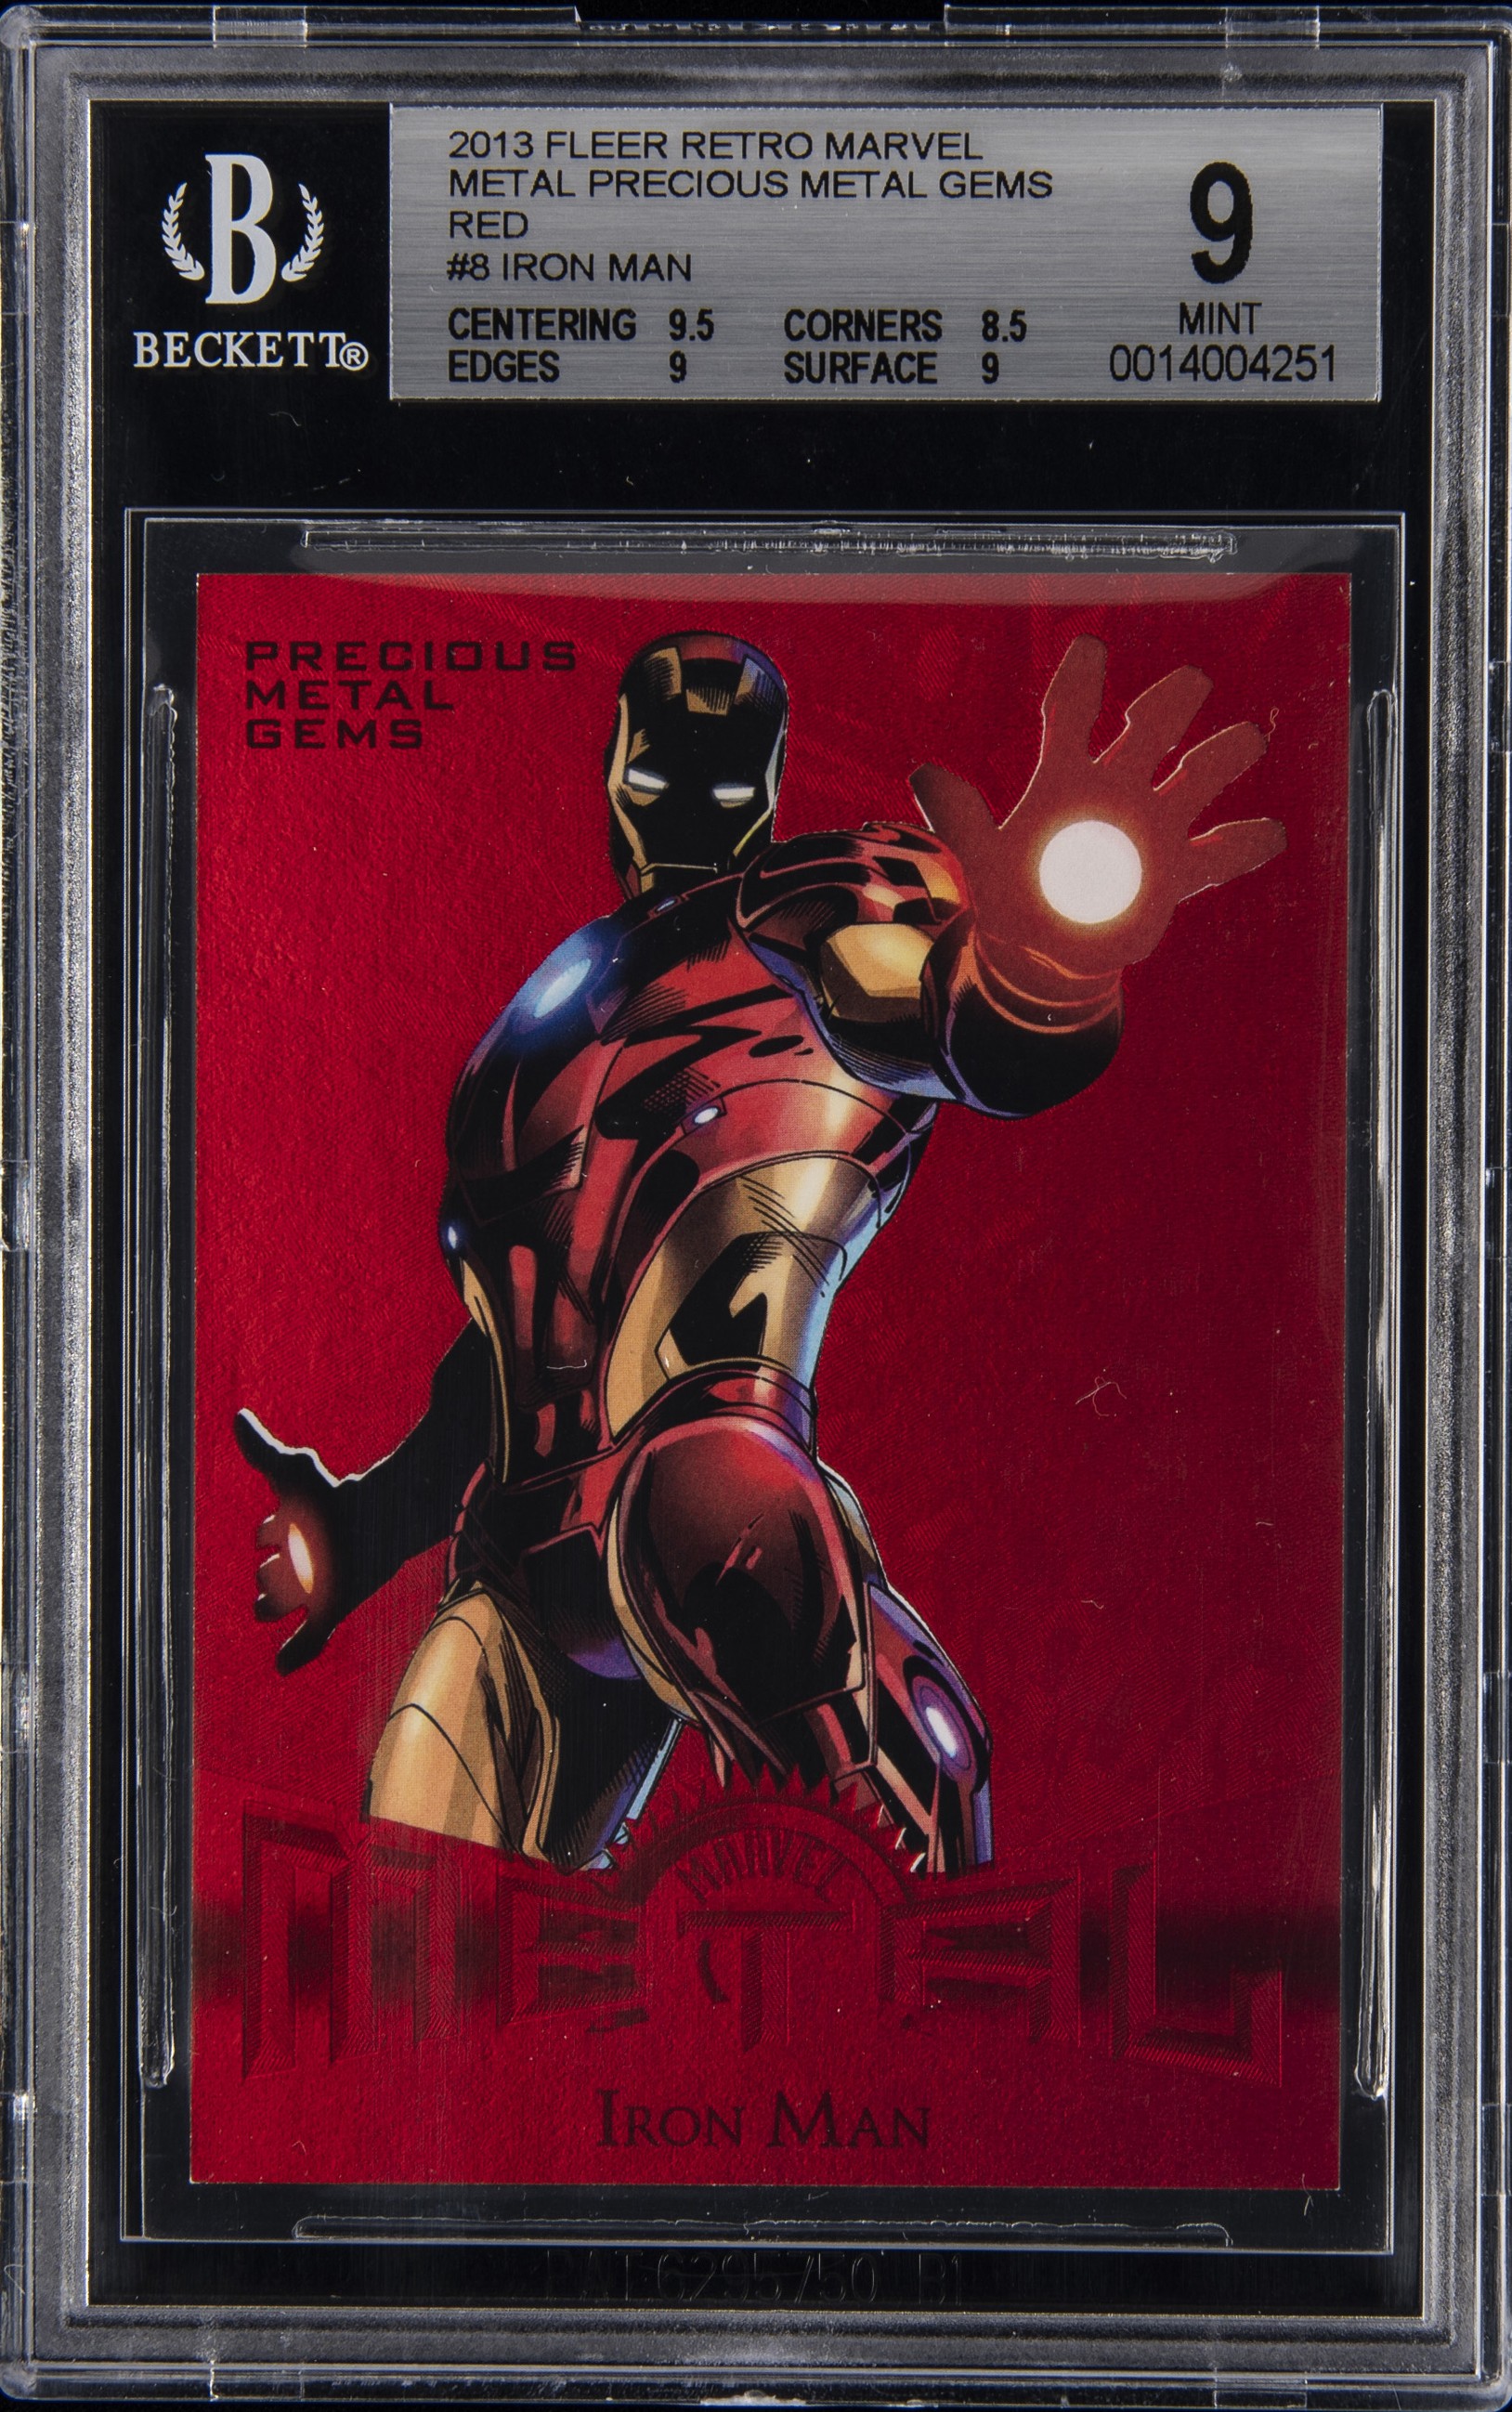 2013 Fleer Retro Marvel Metal Precious Metal Gems (PMG) Red #8 Iron Man (#043/100) - BGS MINT 9 - Pop 3
